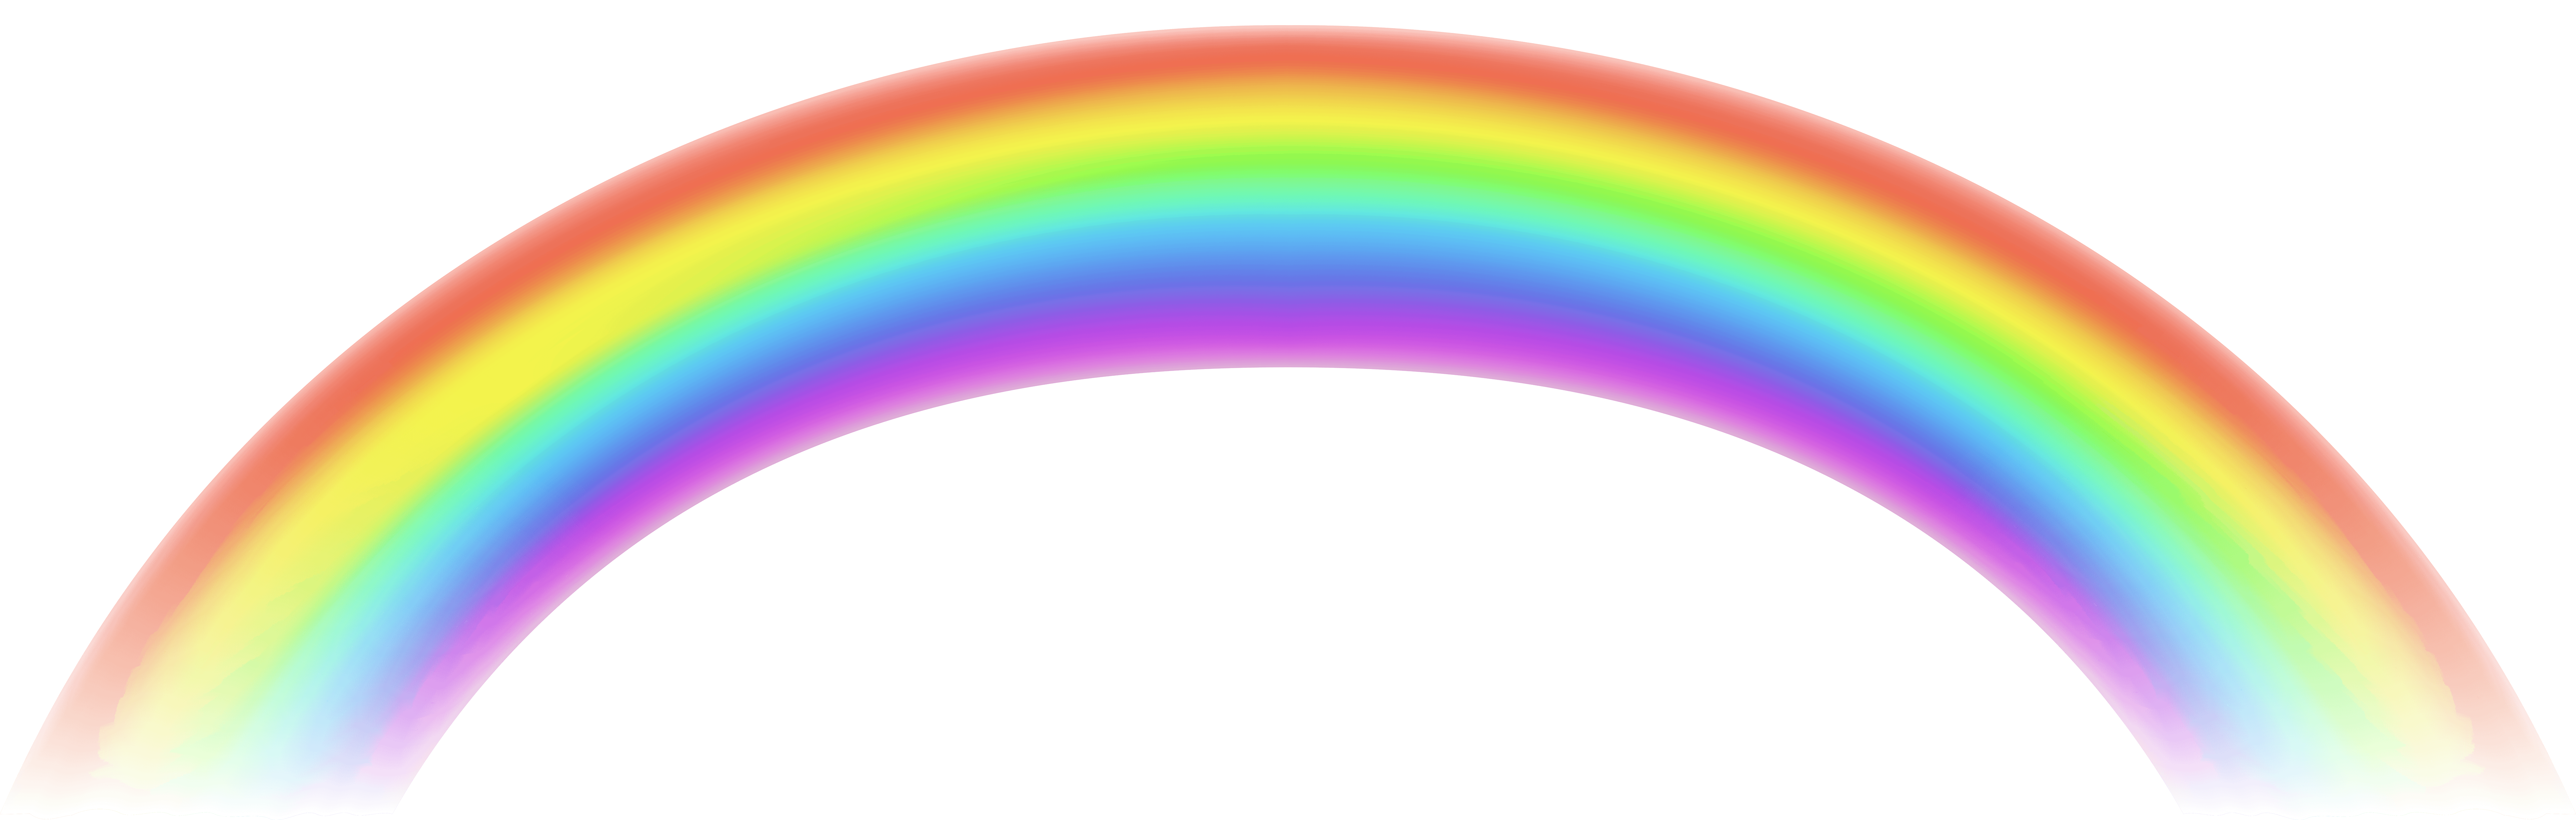 Free Transparent Rainbow Cliparts, Download Free Clip Art.